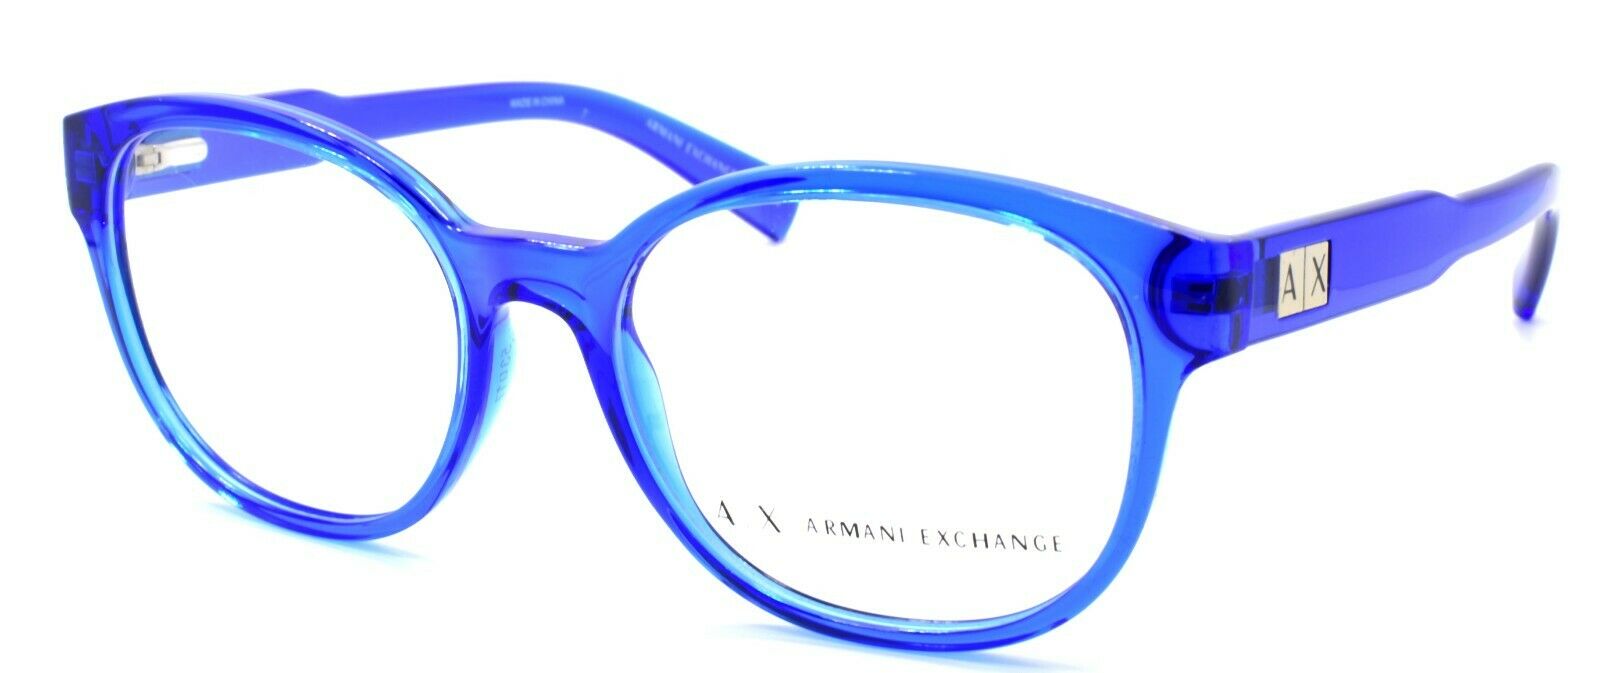 1-Armani Exchange AX3040 8210 Women's Eyeglasses Frames 53-17-140 Transparent Blue-8053672627220-IKSpecs